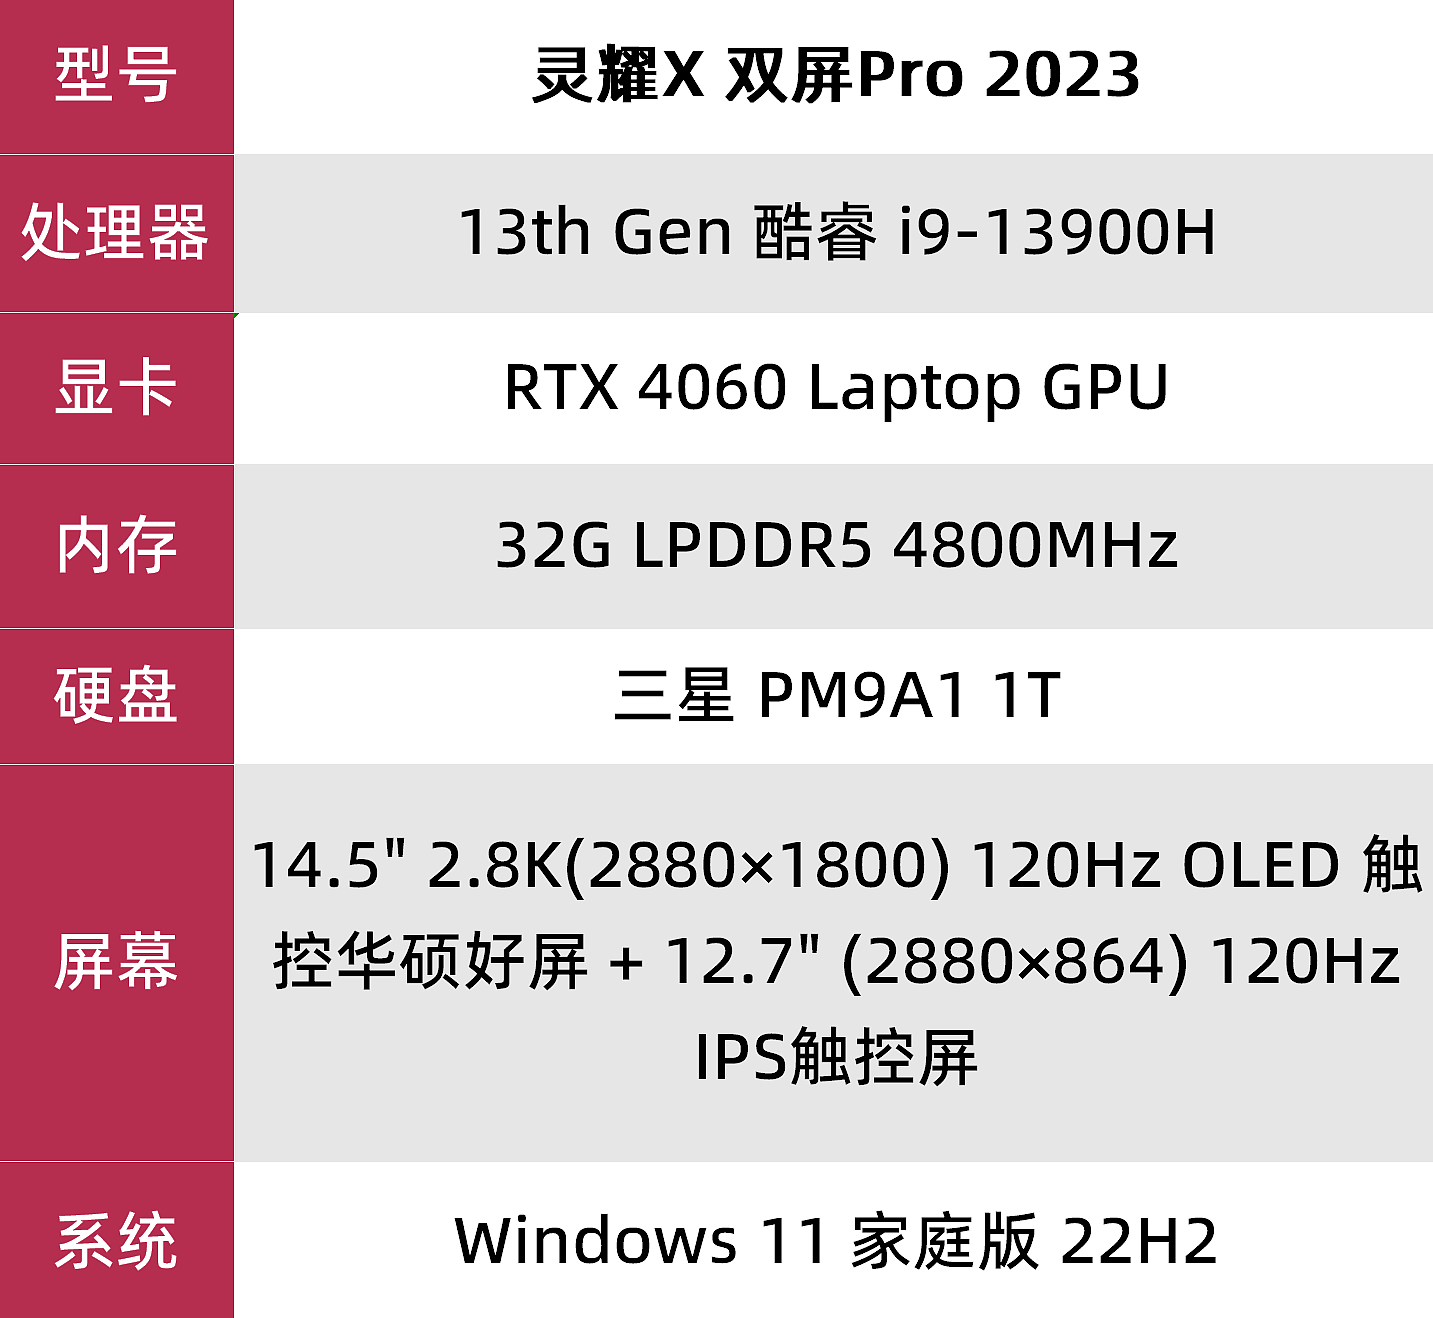 【IT之家评测室】灵耀X 双屏Pro 2023 评测：升级 RTX 4060 性能强劲，双屏设计独具匠心 - 2